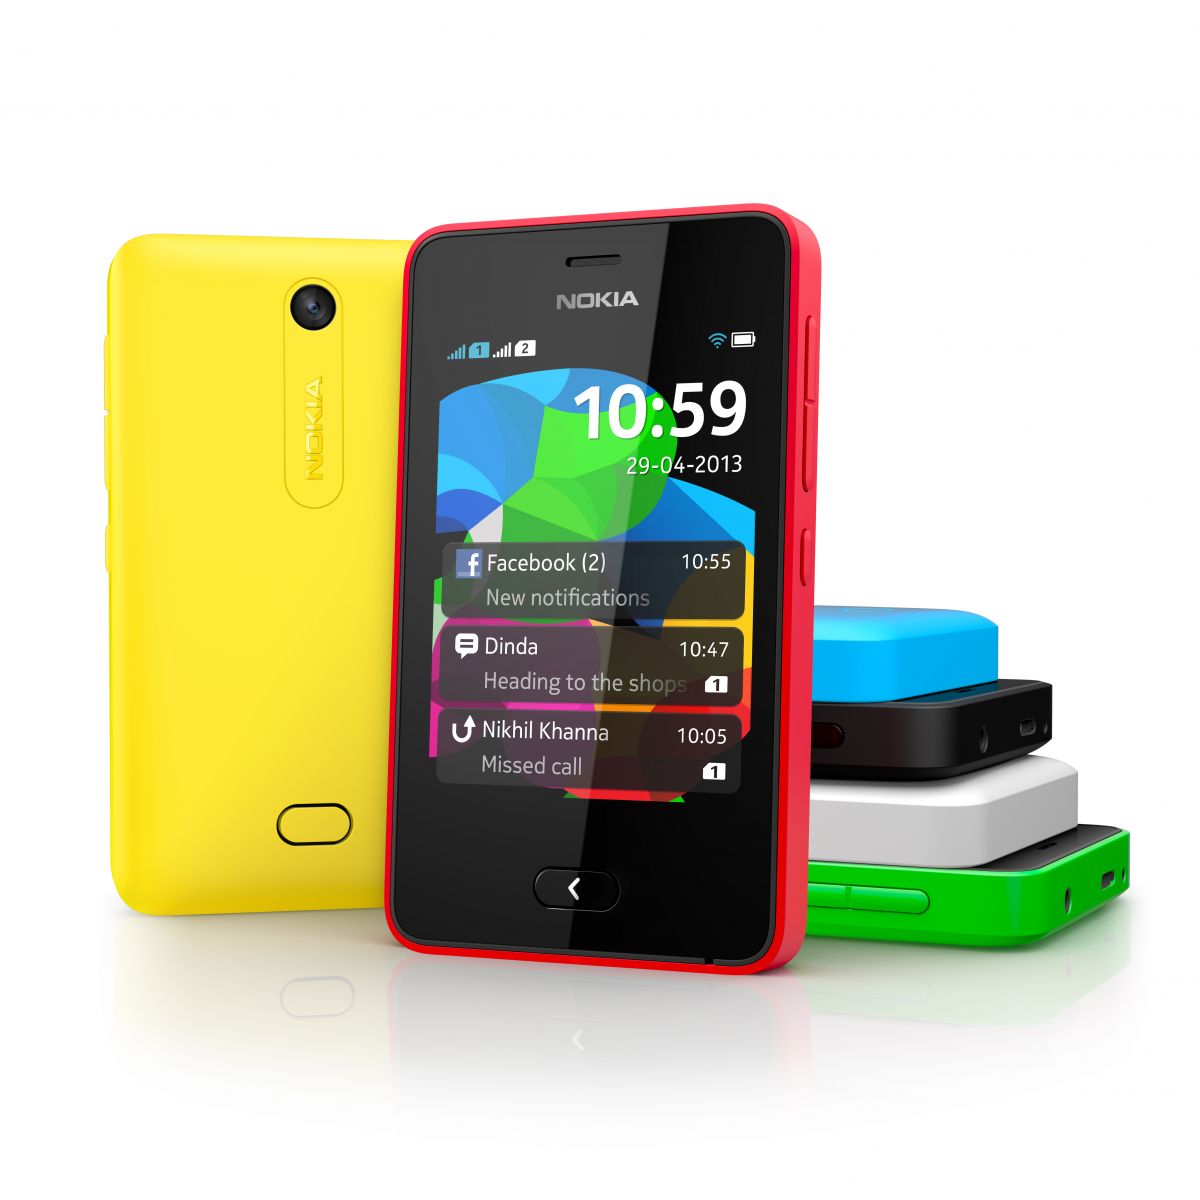 Nokia Launches Super Pocket Power Asha 501